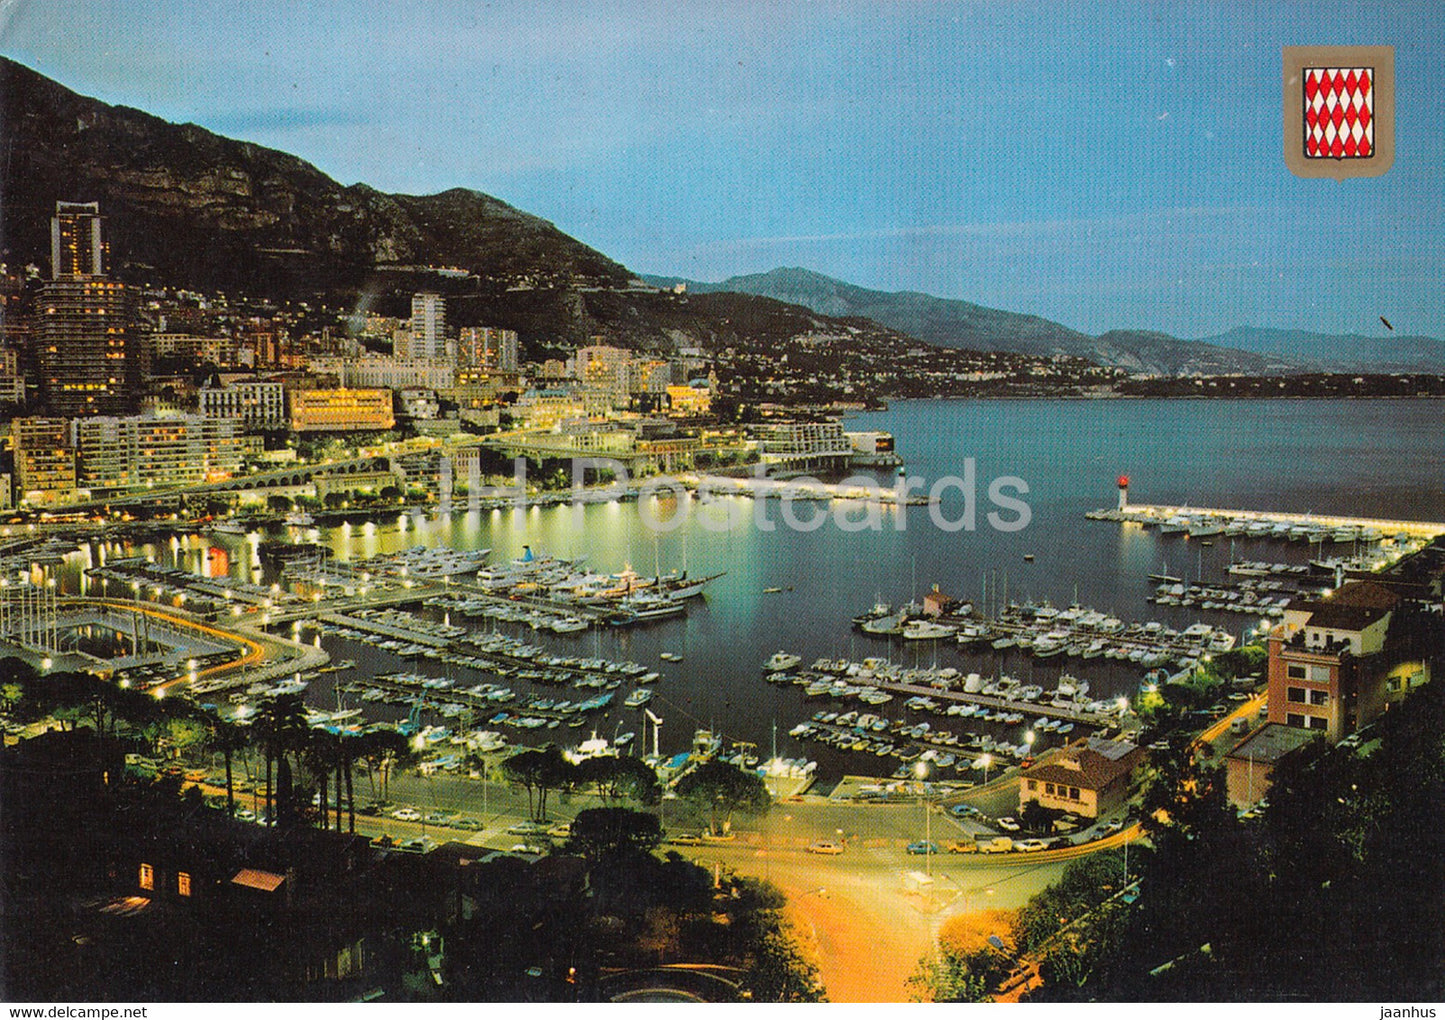 Principaute de Monaco - Vue du Portl a Nuit - 1987 - Monaco - used - JH Postcards